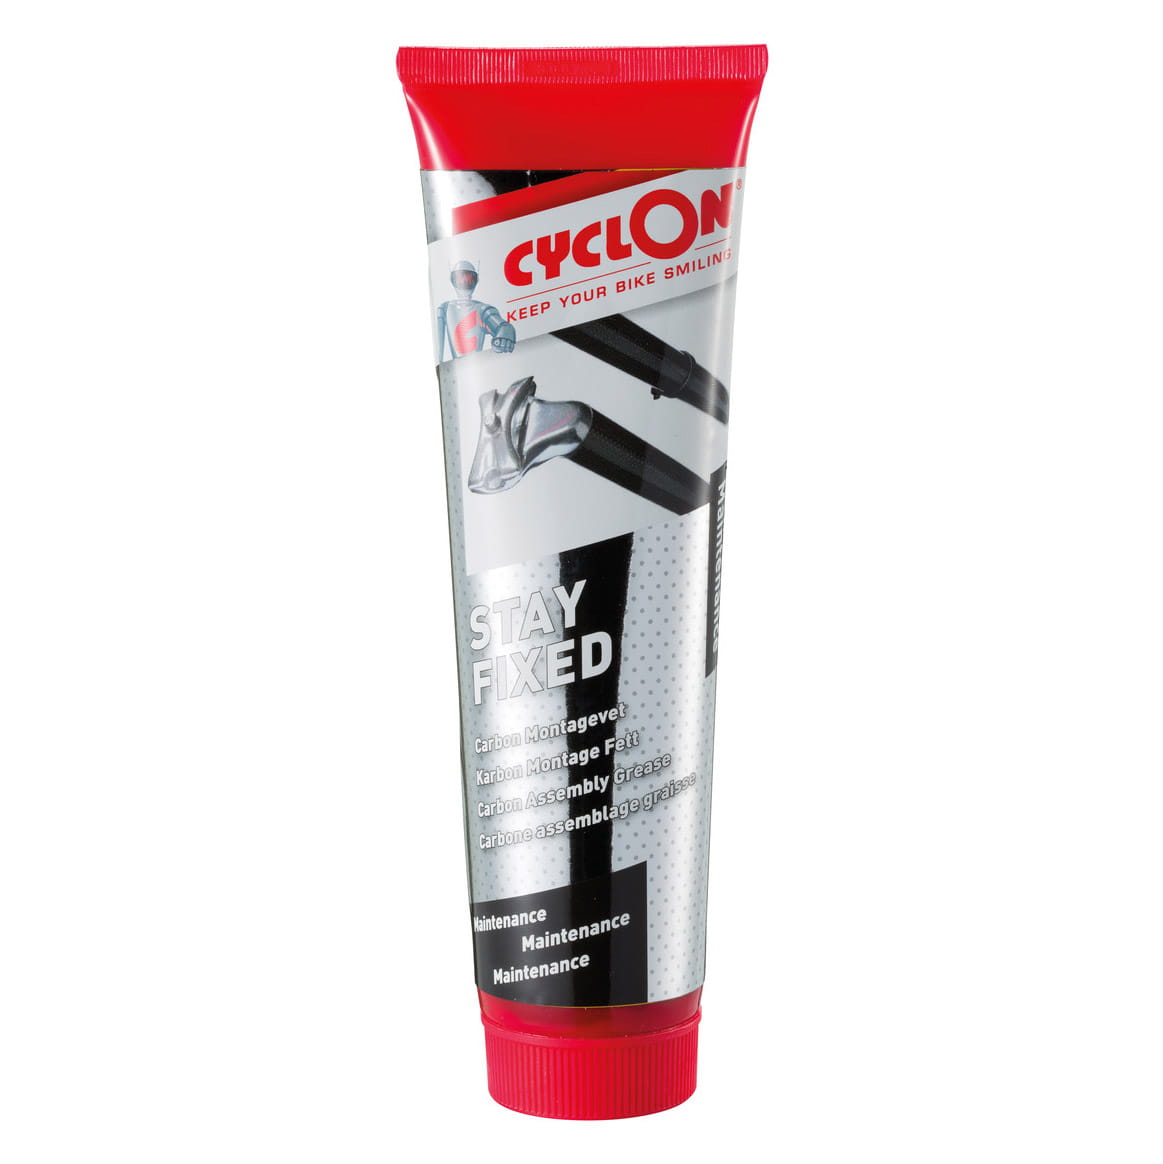 Cyclon Stay Fixed Carbon Montagepaste Fahrrad / MTB 150 ml